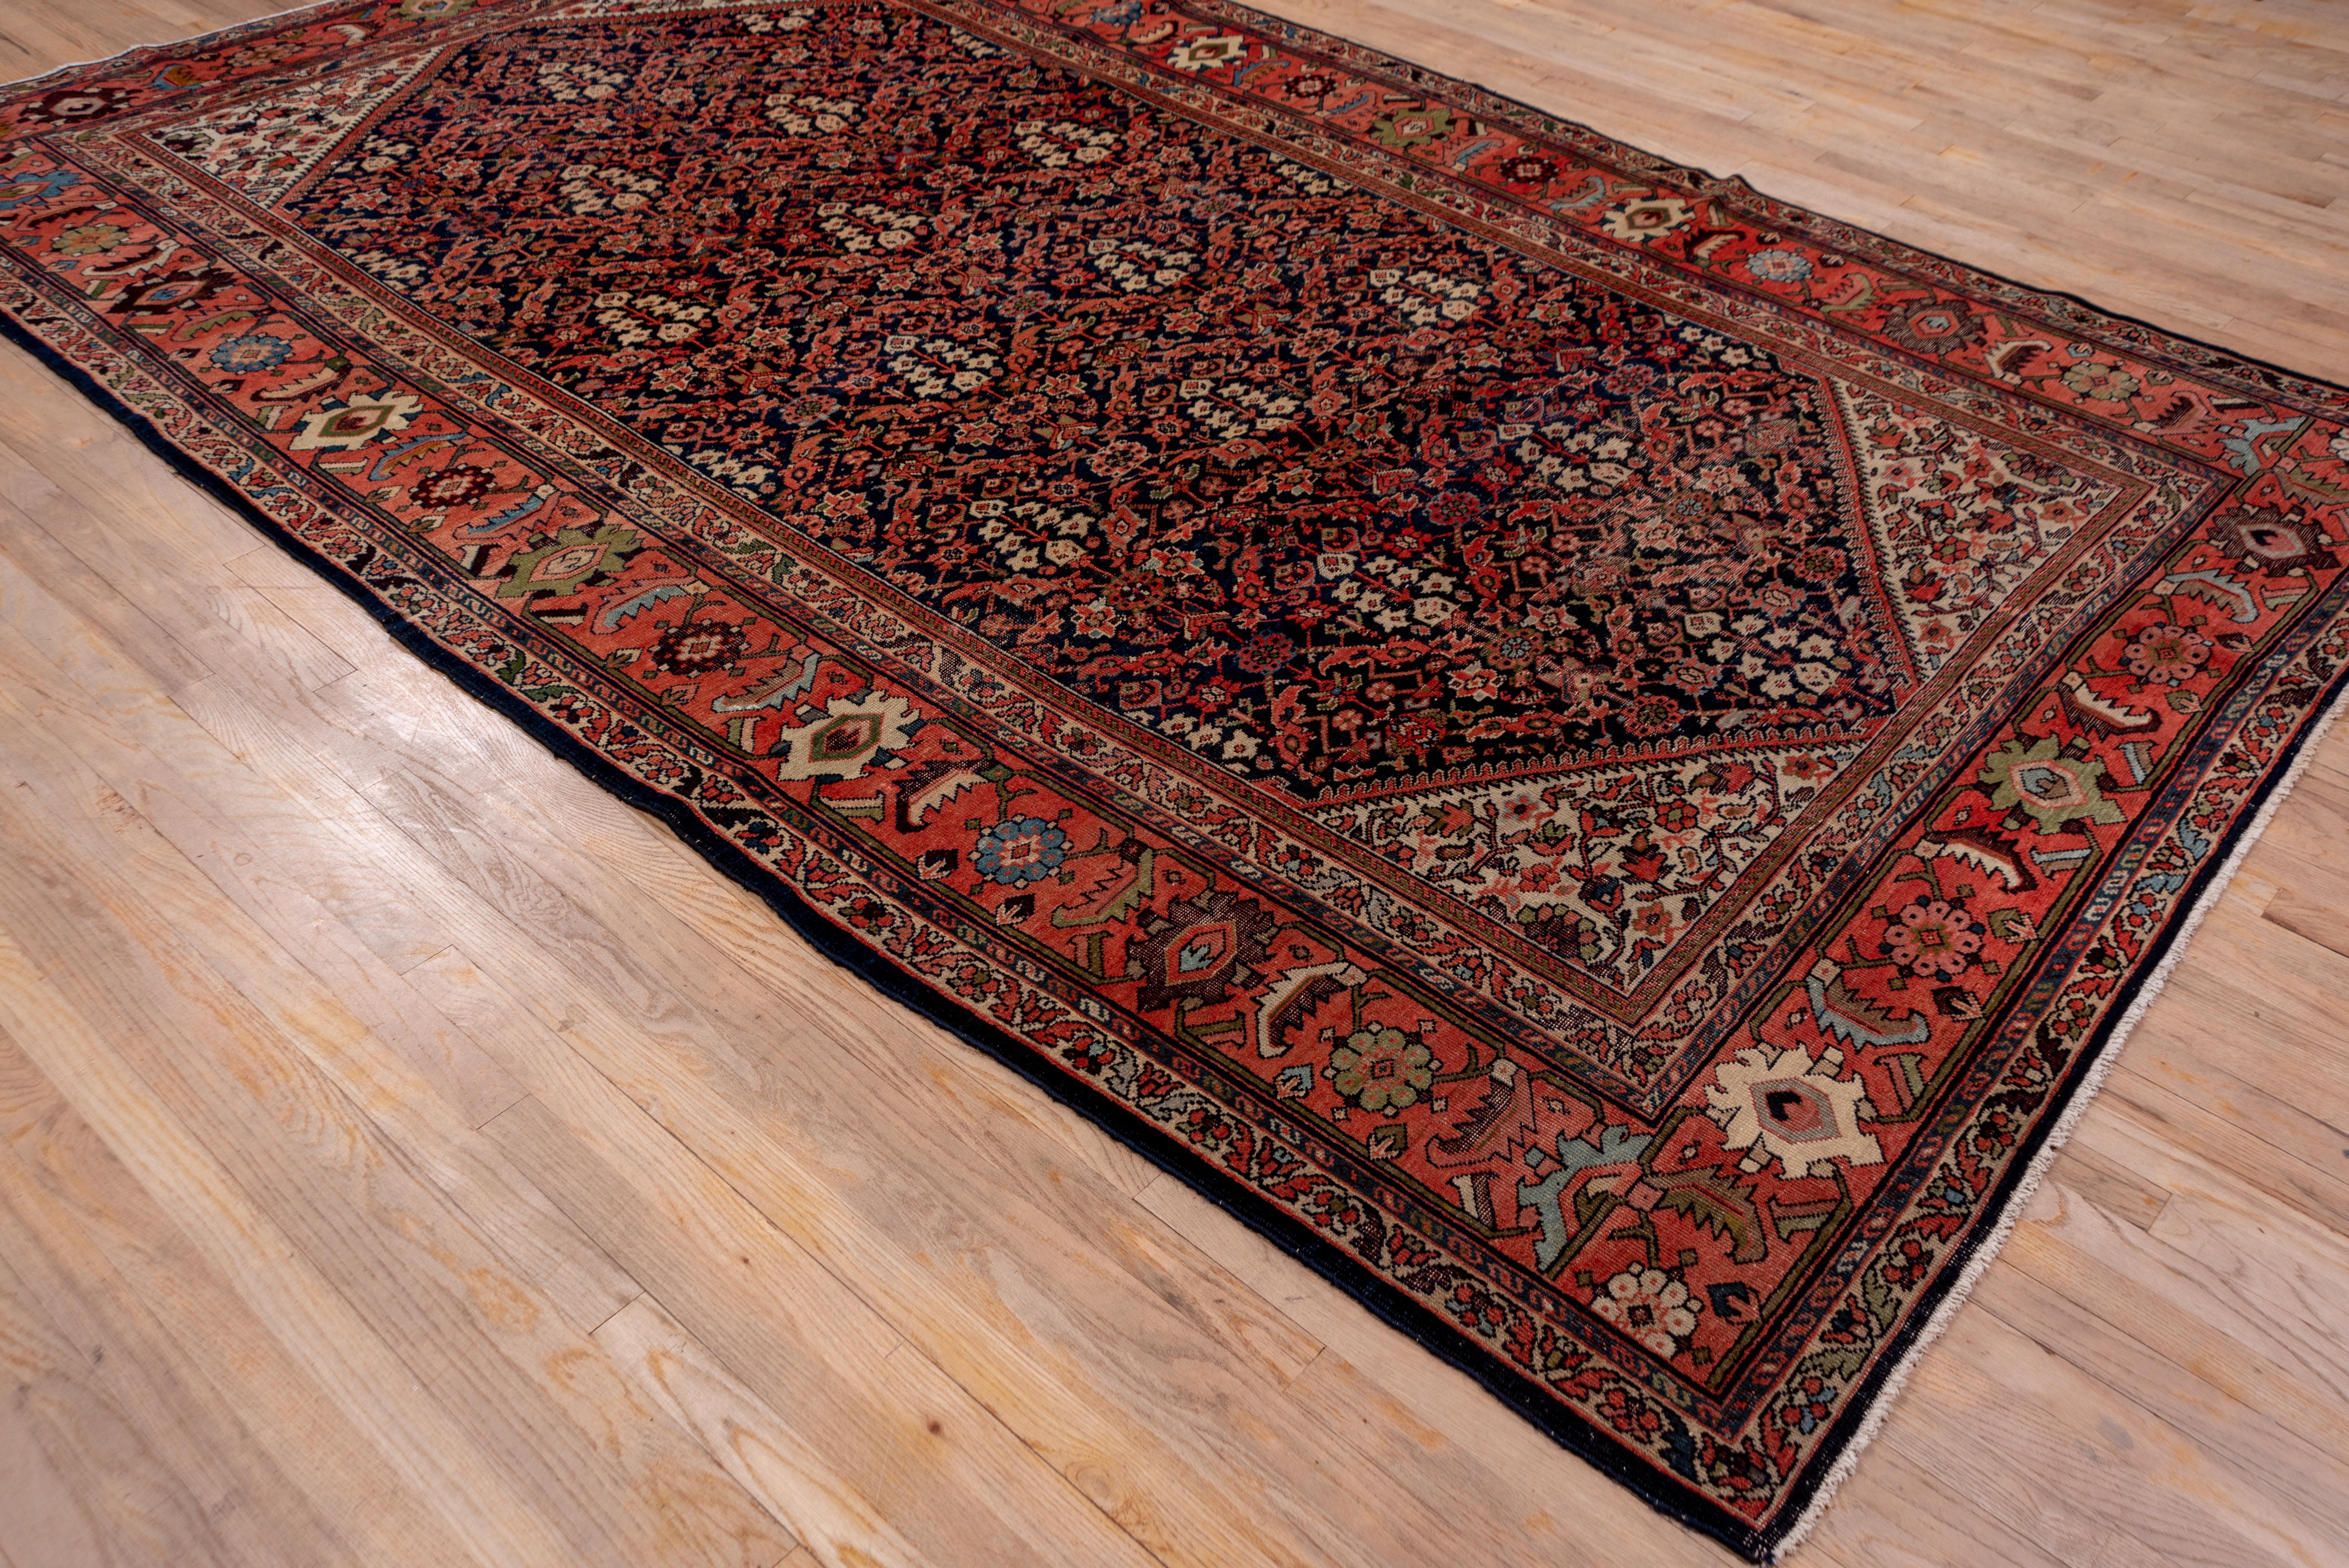 Wool Antique Persian Tribal Farahan Carpet, Circa 1920s